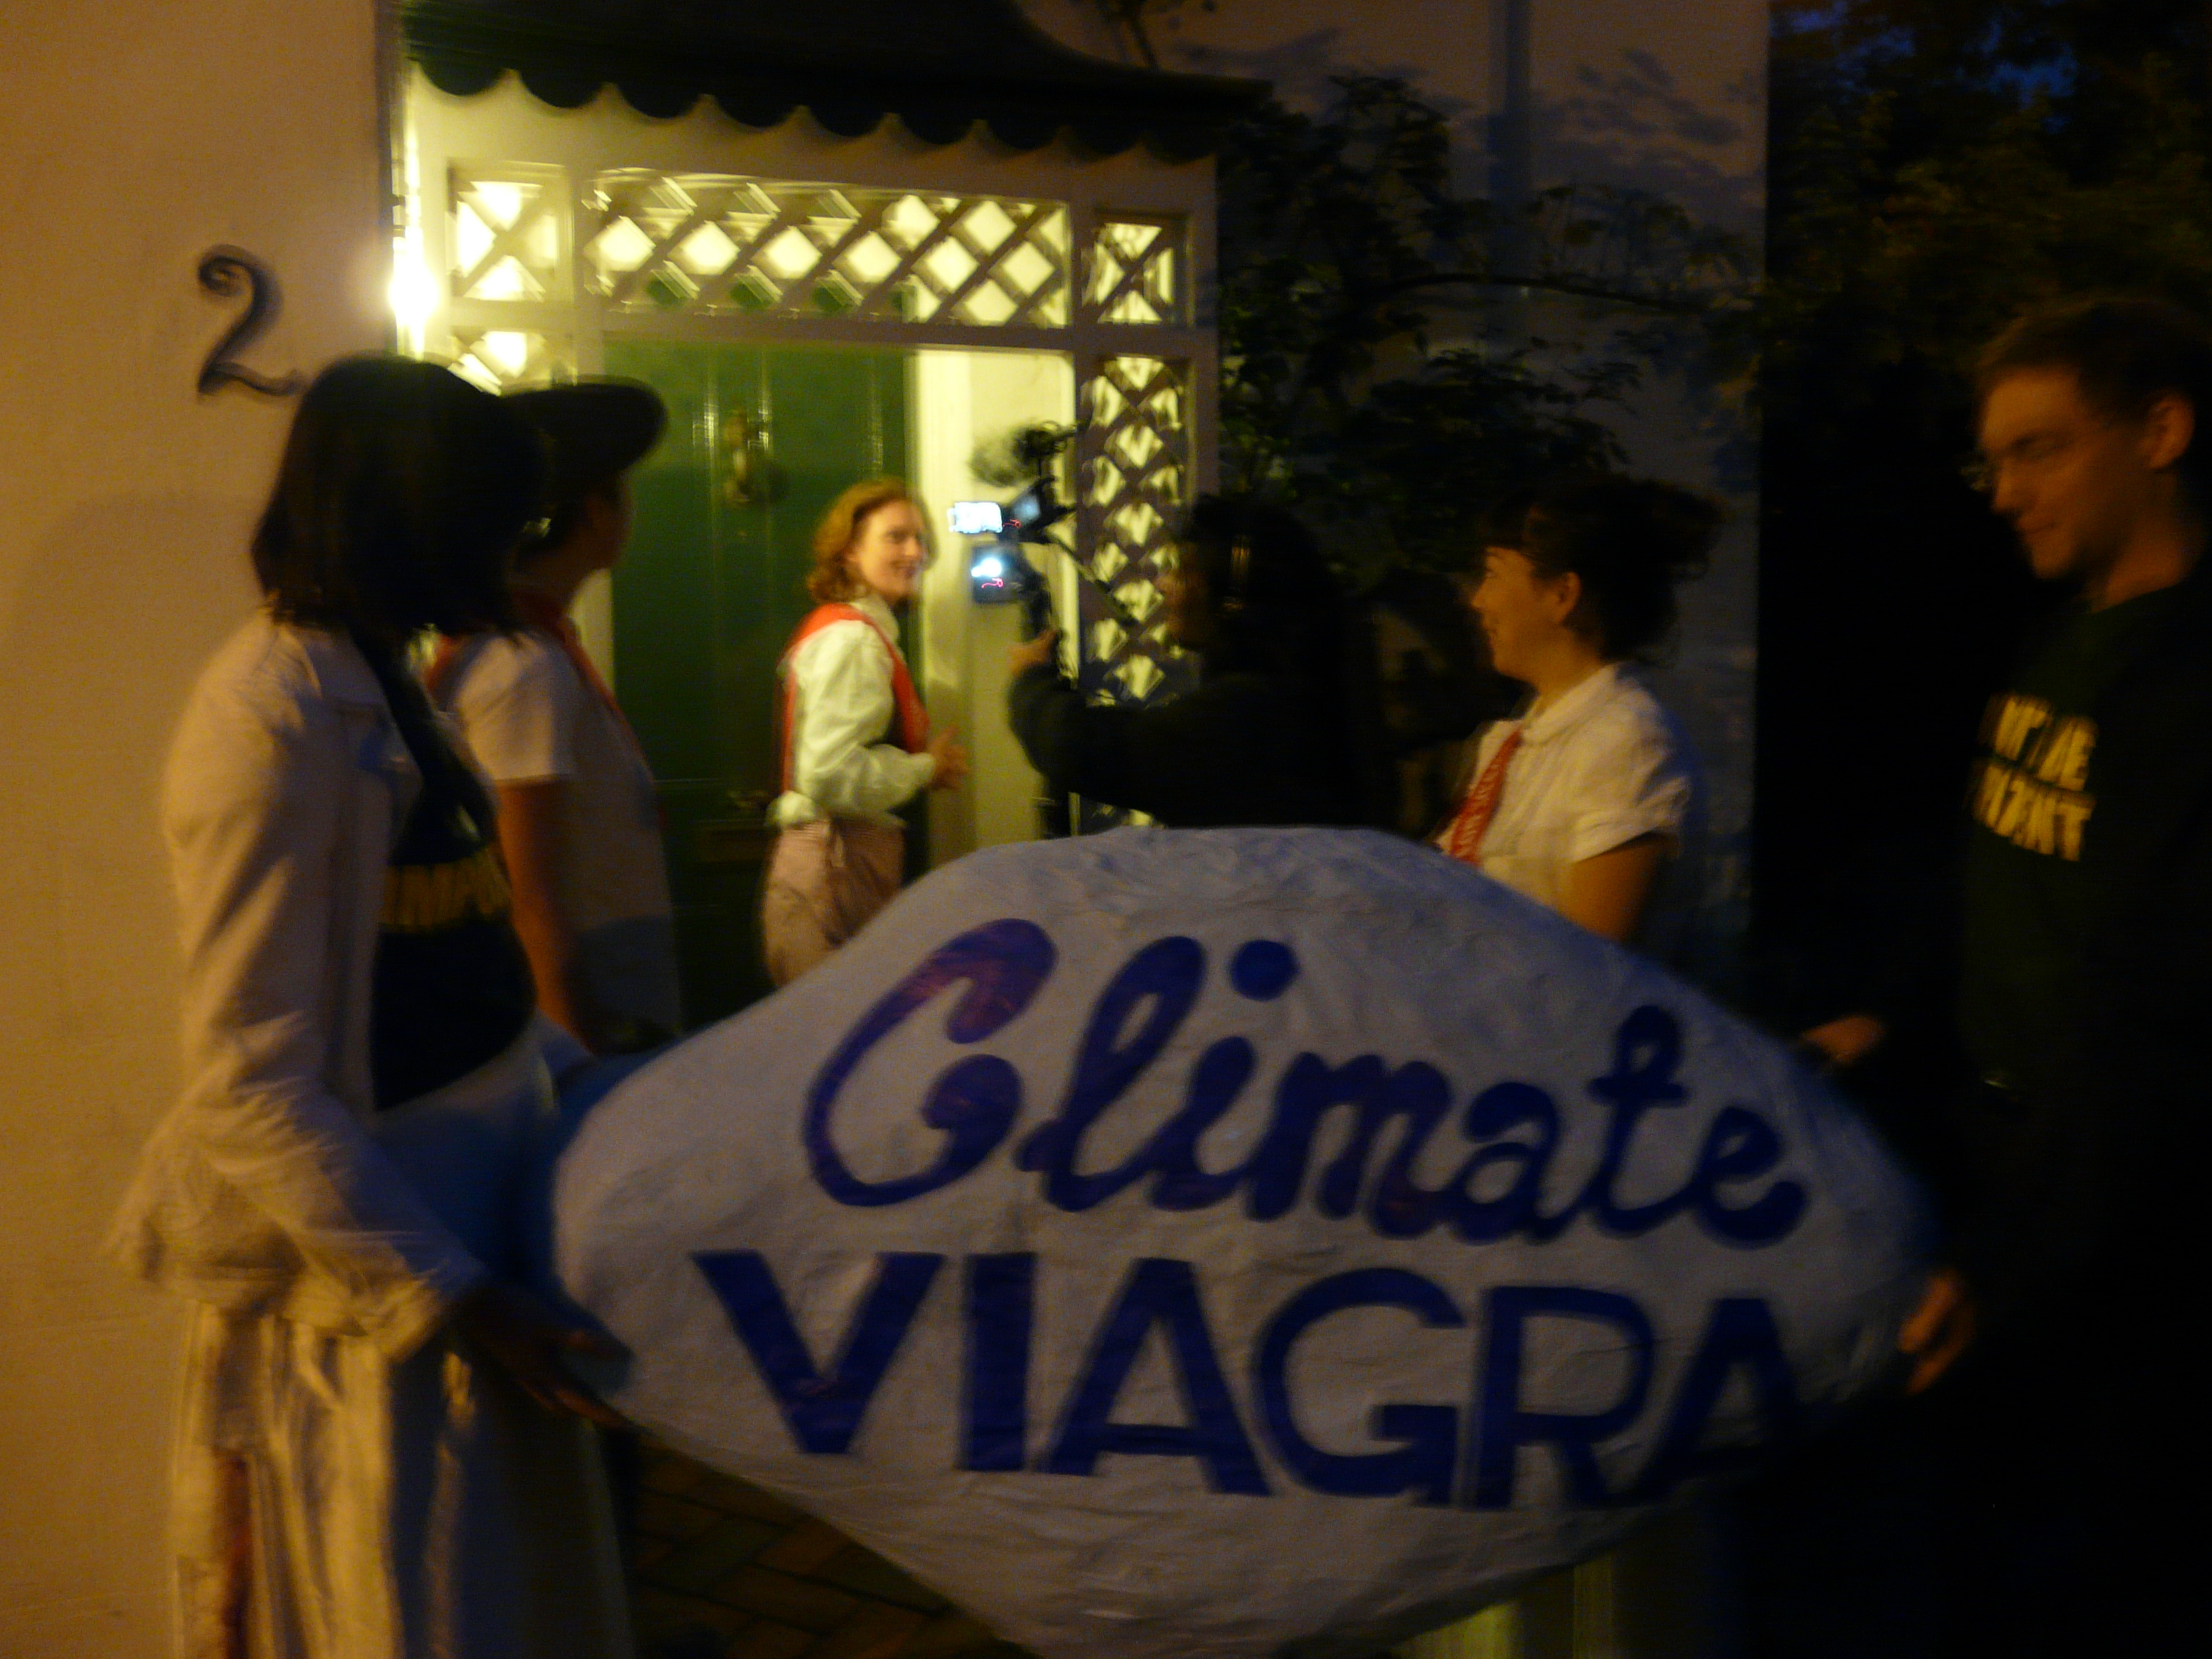 Climate Rush show off their Climate Viagra